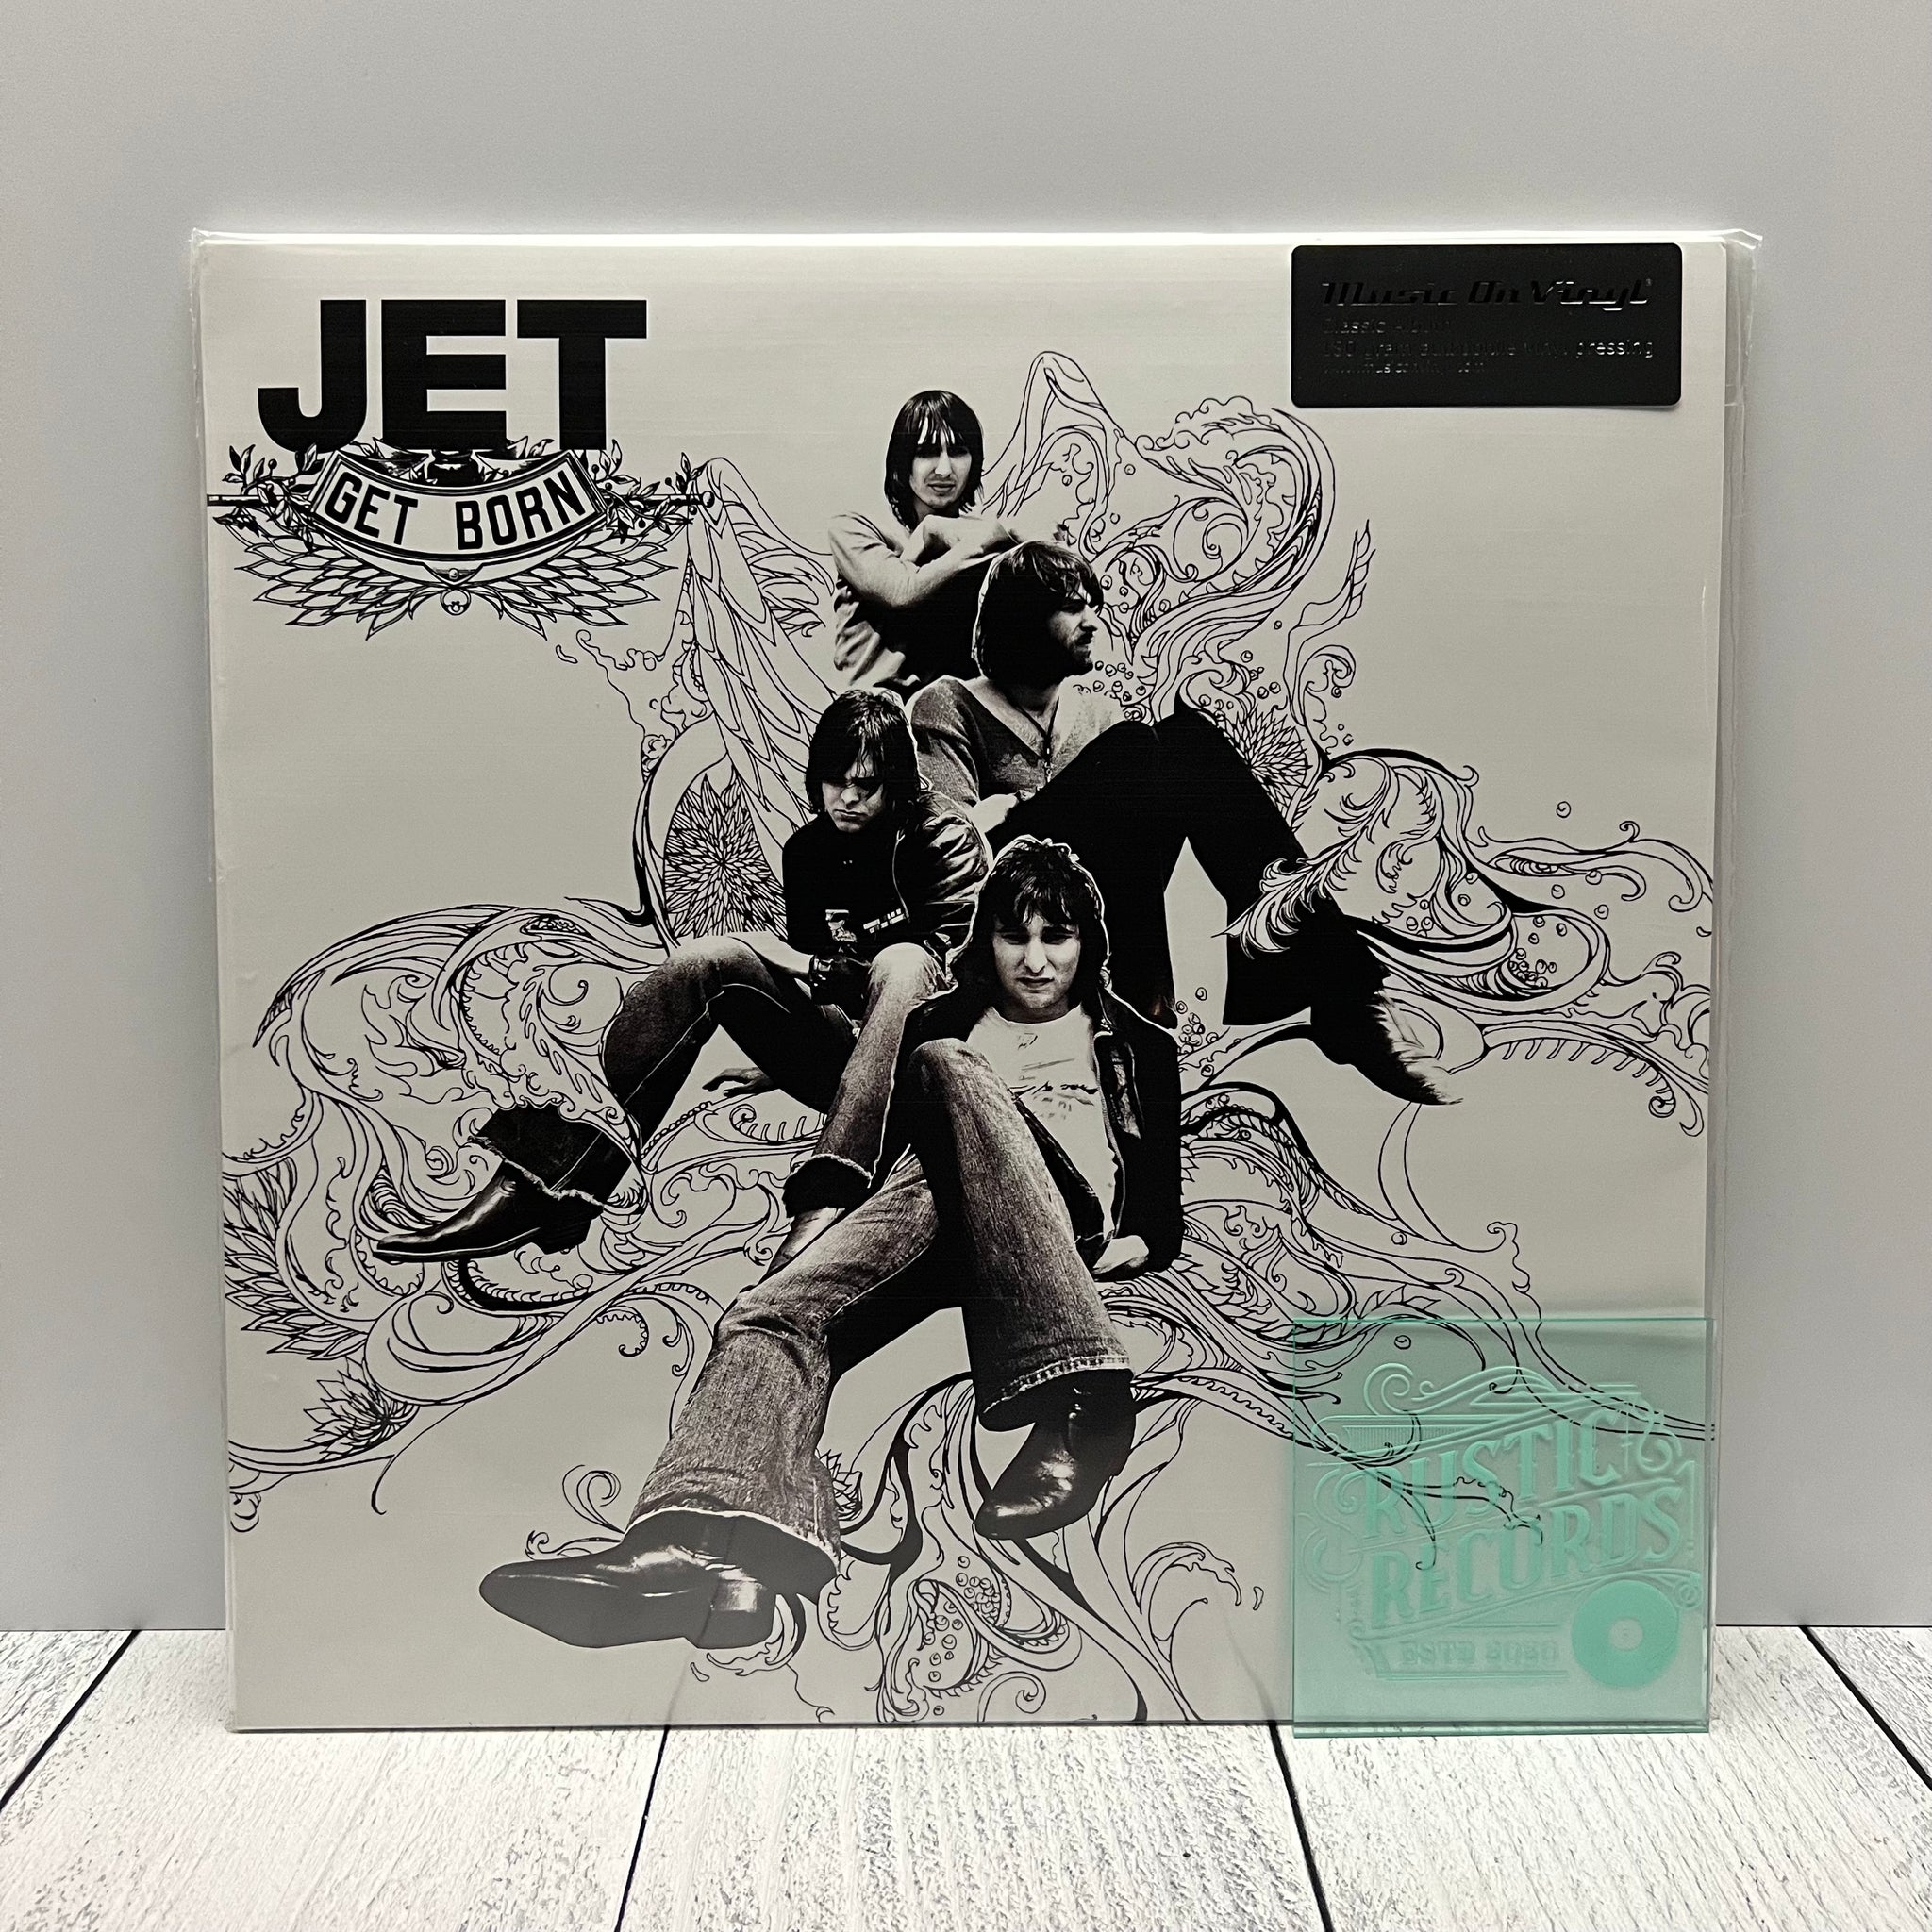 Jet - Get Born (Music On Vinyl)